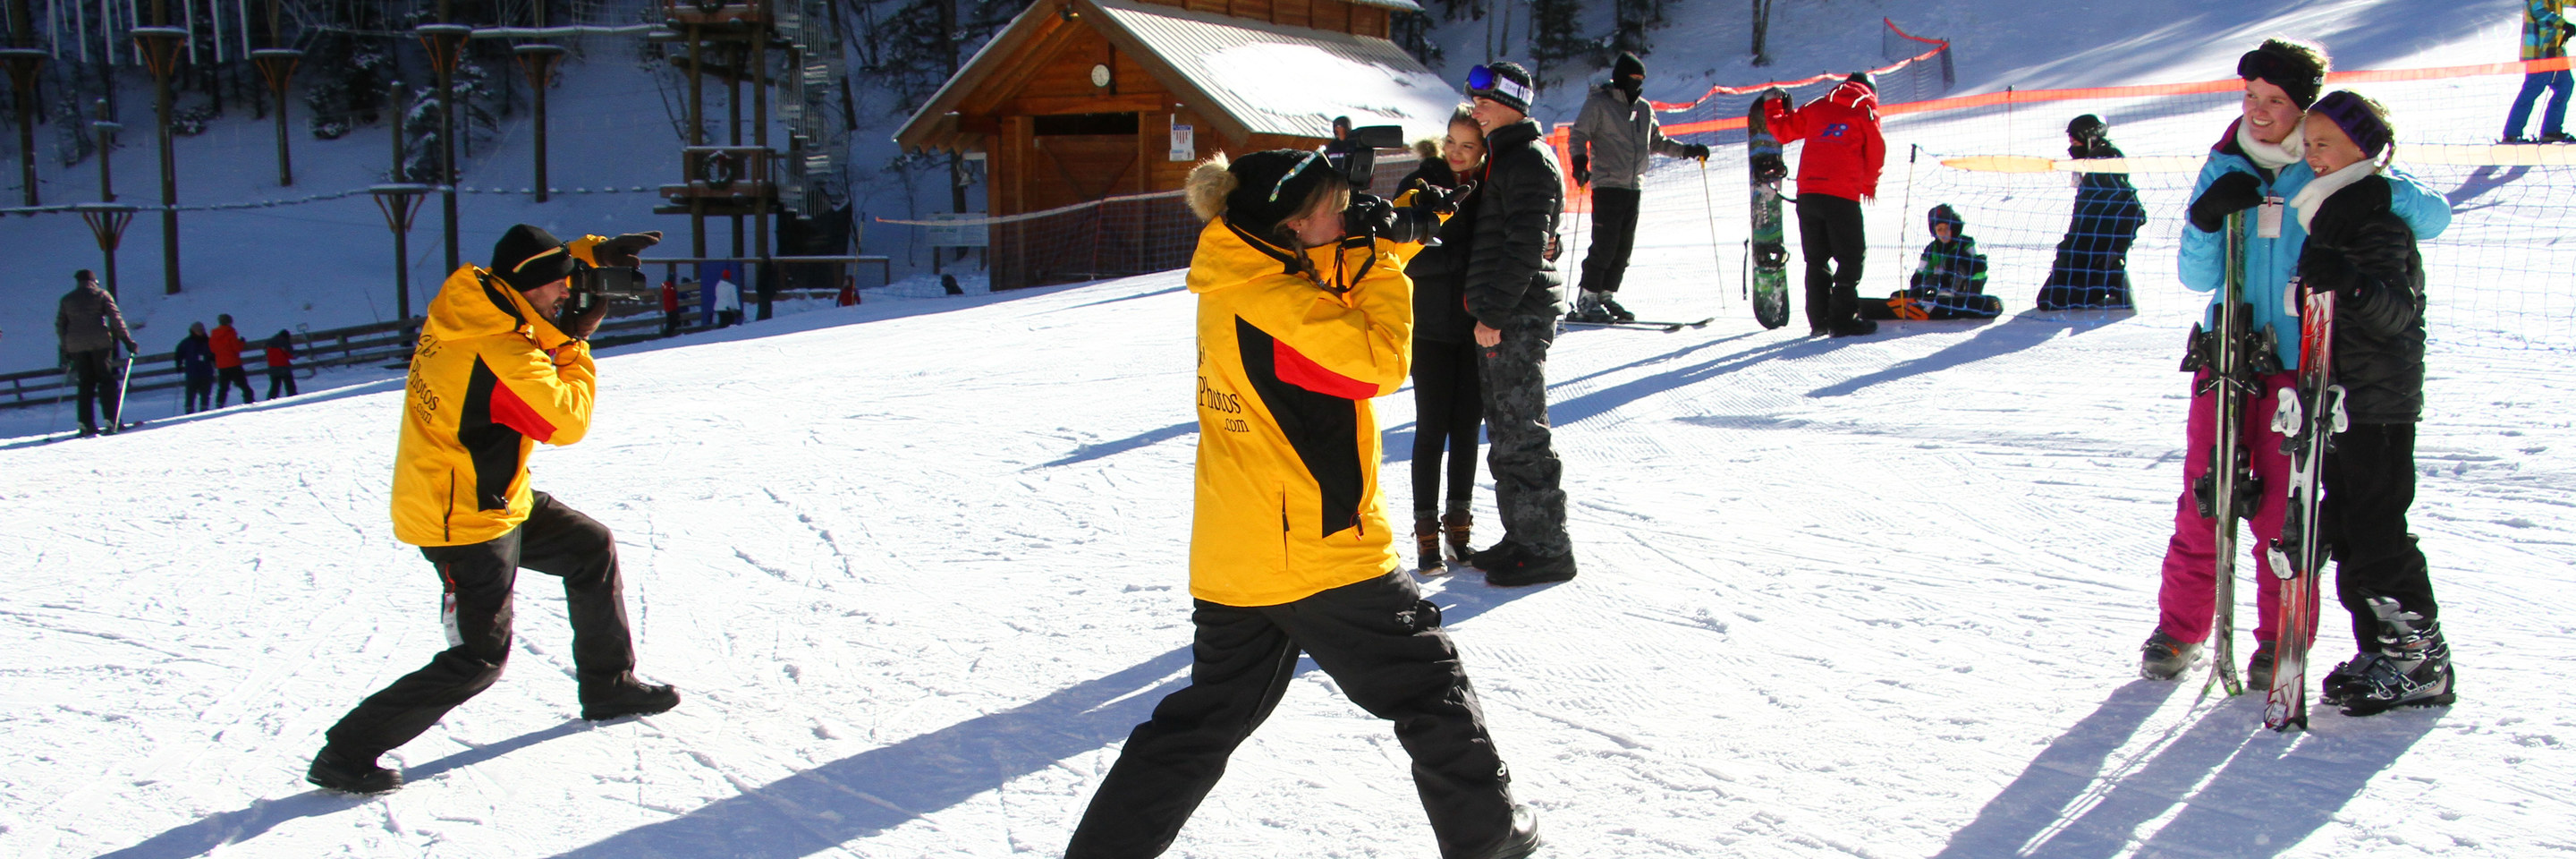 photographers taking photos of people skiing